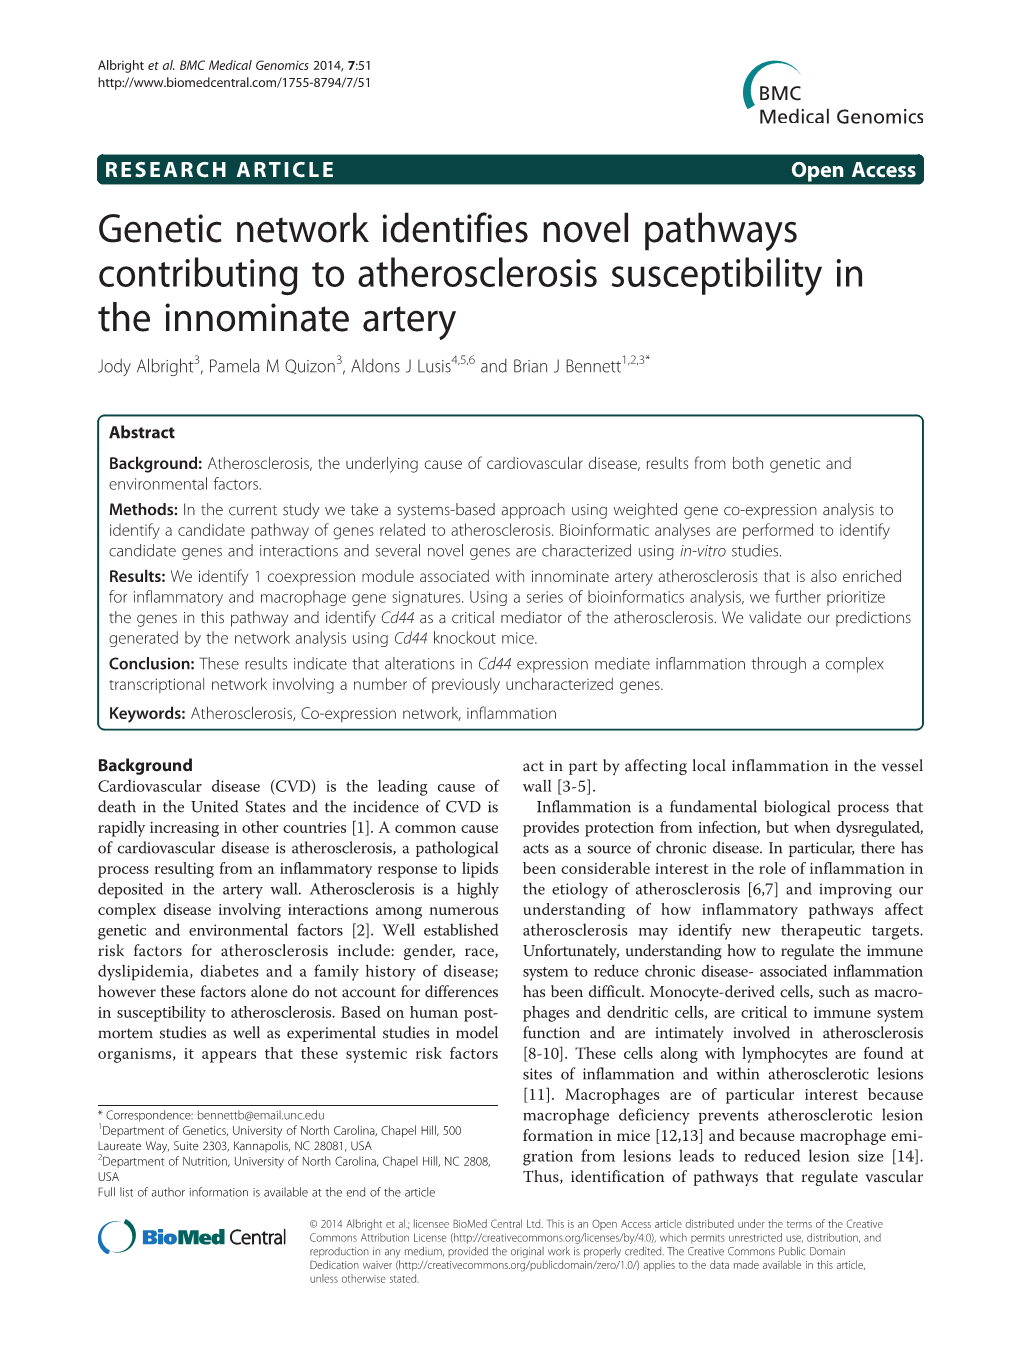 Genetic Network Identifies Novel Pathways Contributing To